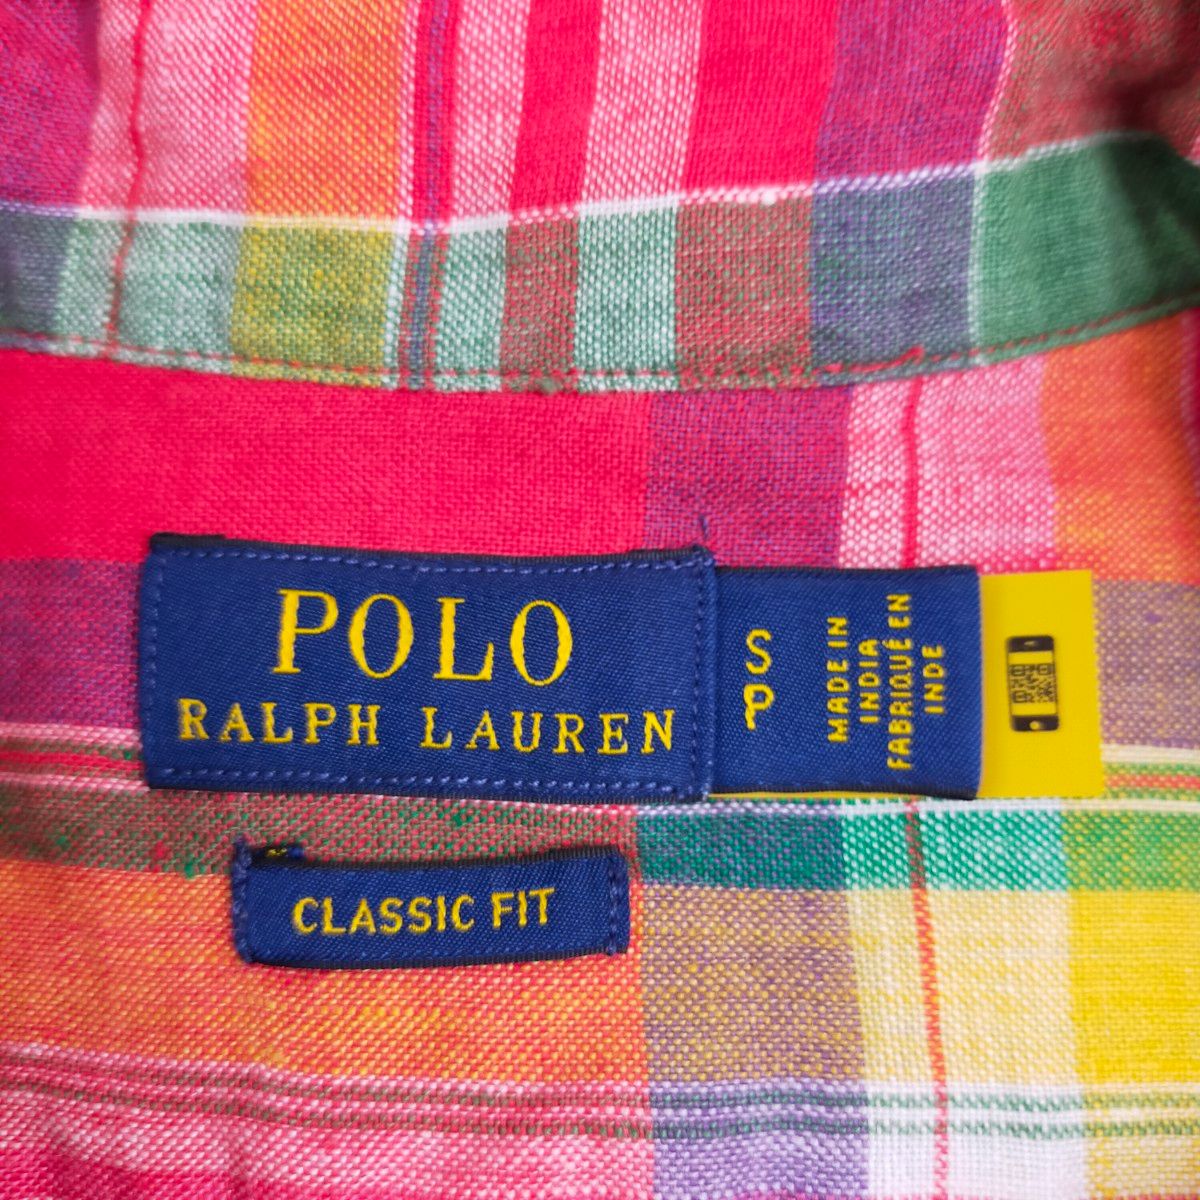 POLO RALPH LAUREN ポロ ラルフローレン 麻100% リネンシャツ チェック柄 メンズ S  160/84A